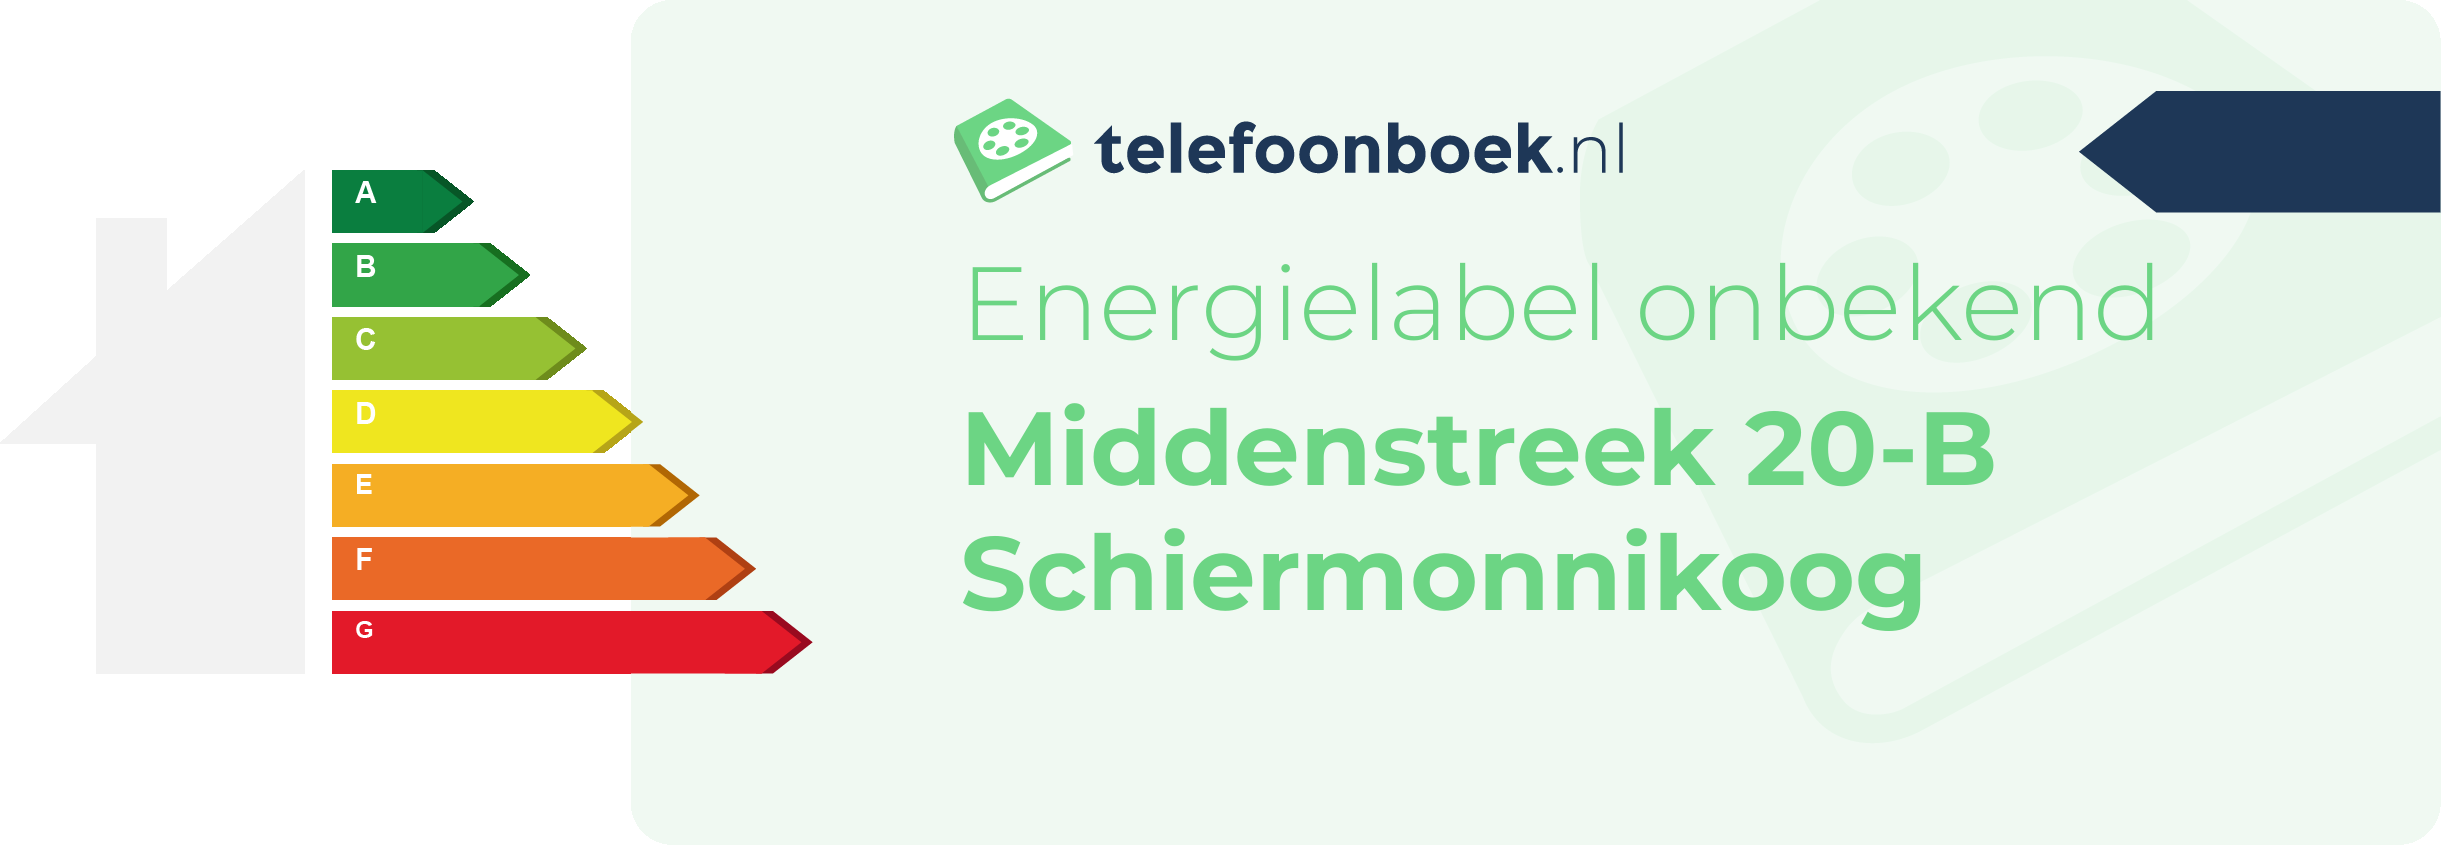 Energielabel Middenstreek 20-B Schiermonnikoog